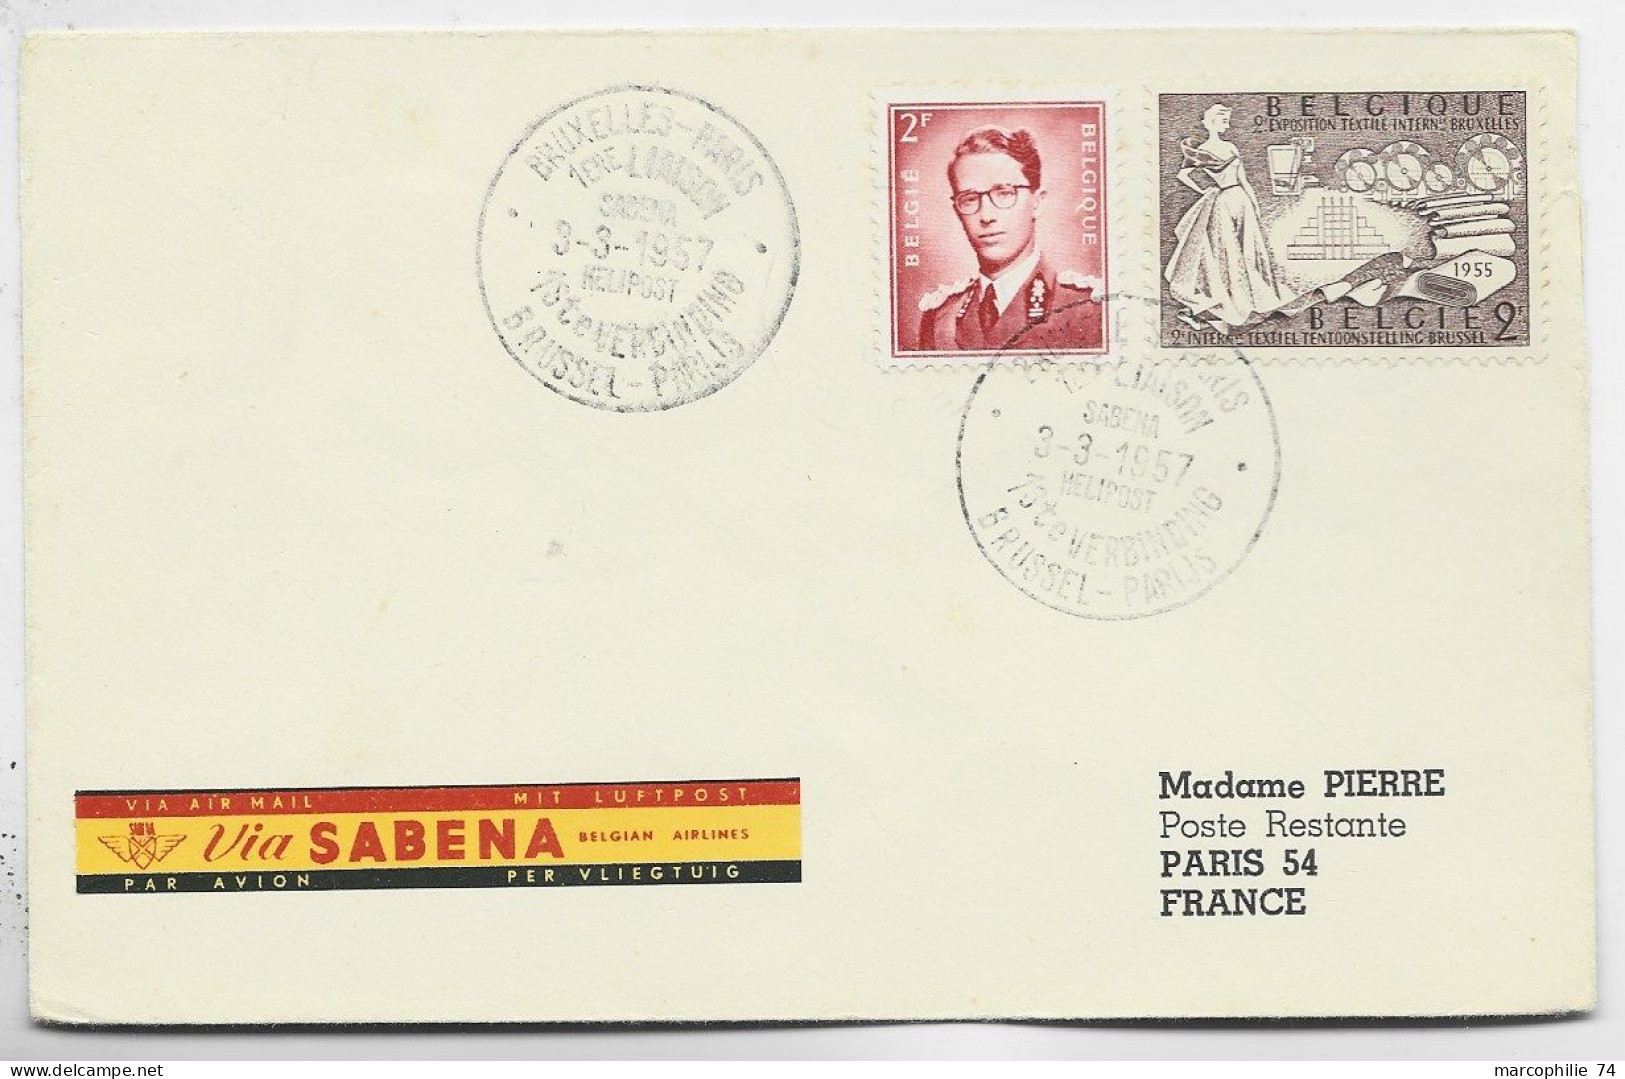 BELGIQUE 2FR+2FR LETTRE COVER VIA SABENA BRUXELLES PARIS 3.3.1957 TO FRANCE - Briefe U. Dokumente